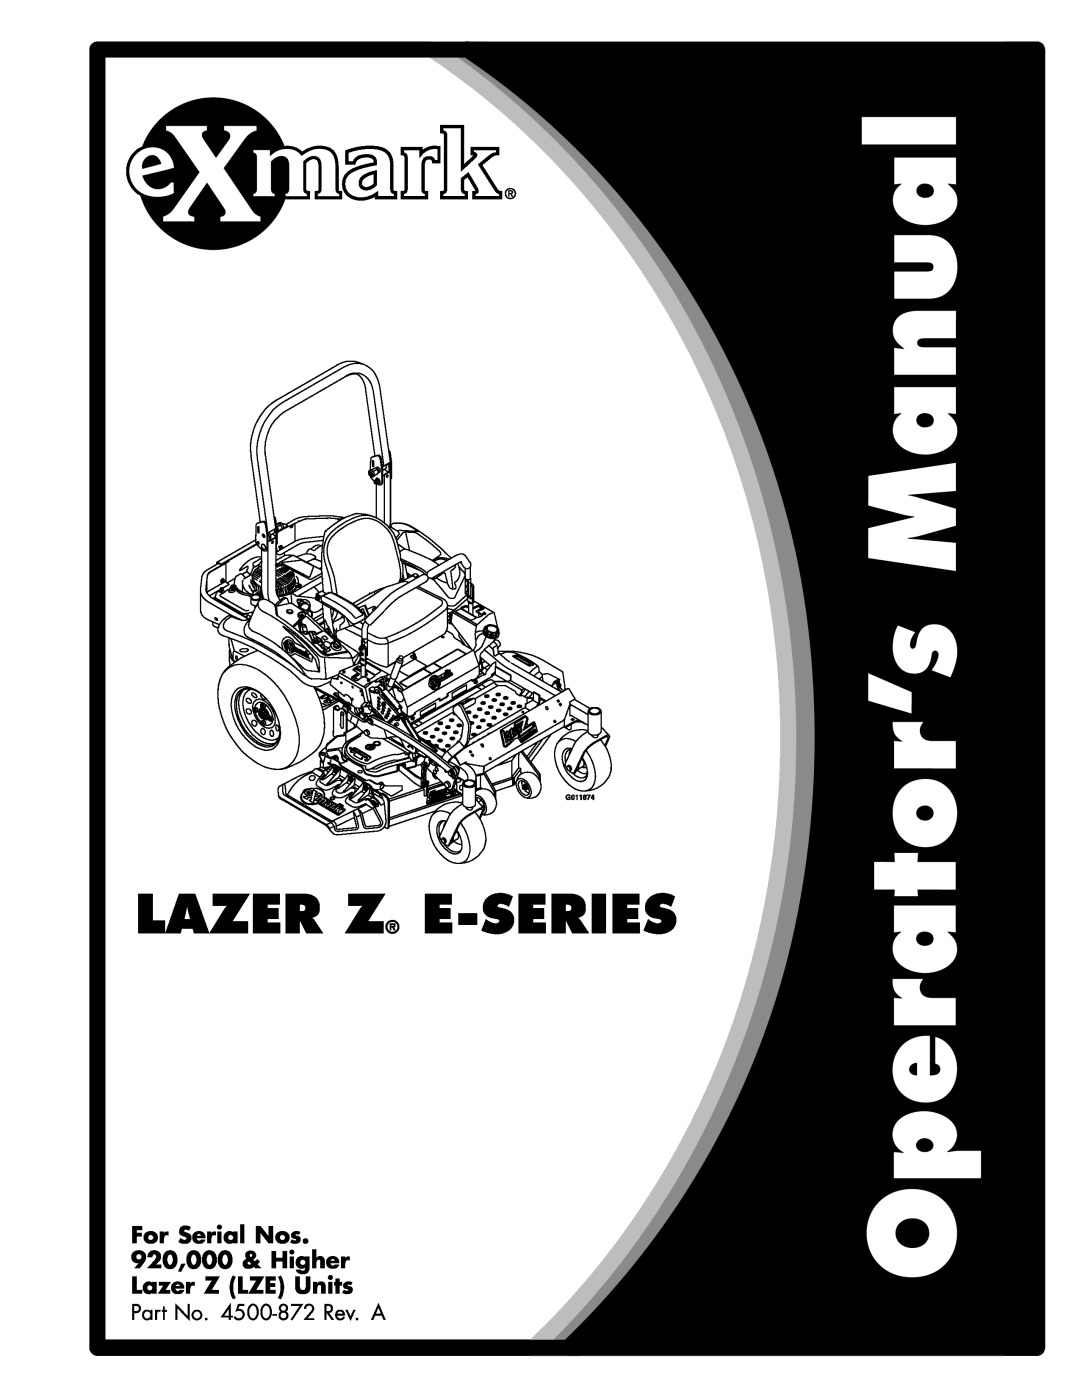 Exmark 4500-872 manual For Serial Nos 920,000 & Higher Lazer Z LZE Units, Lazer Z E-Series 